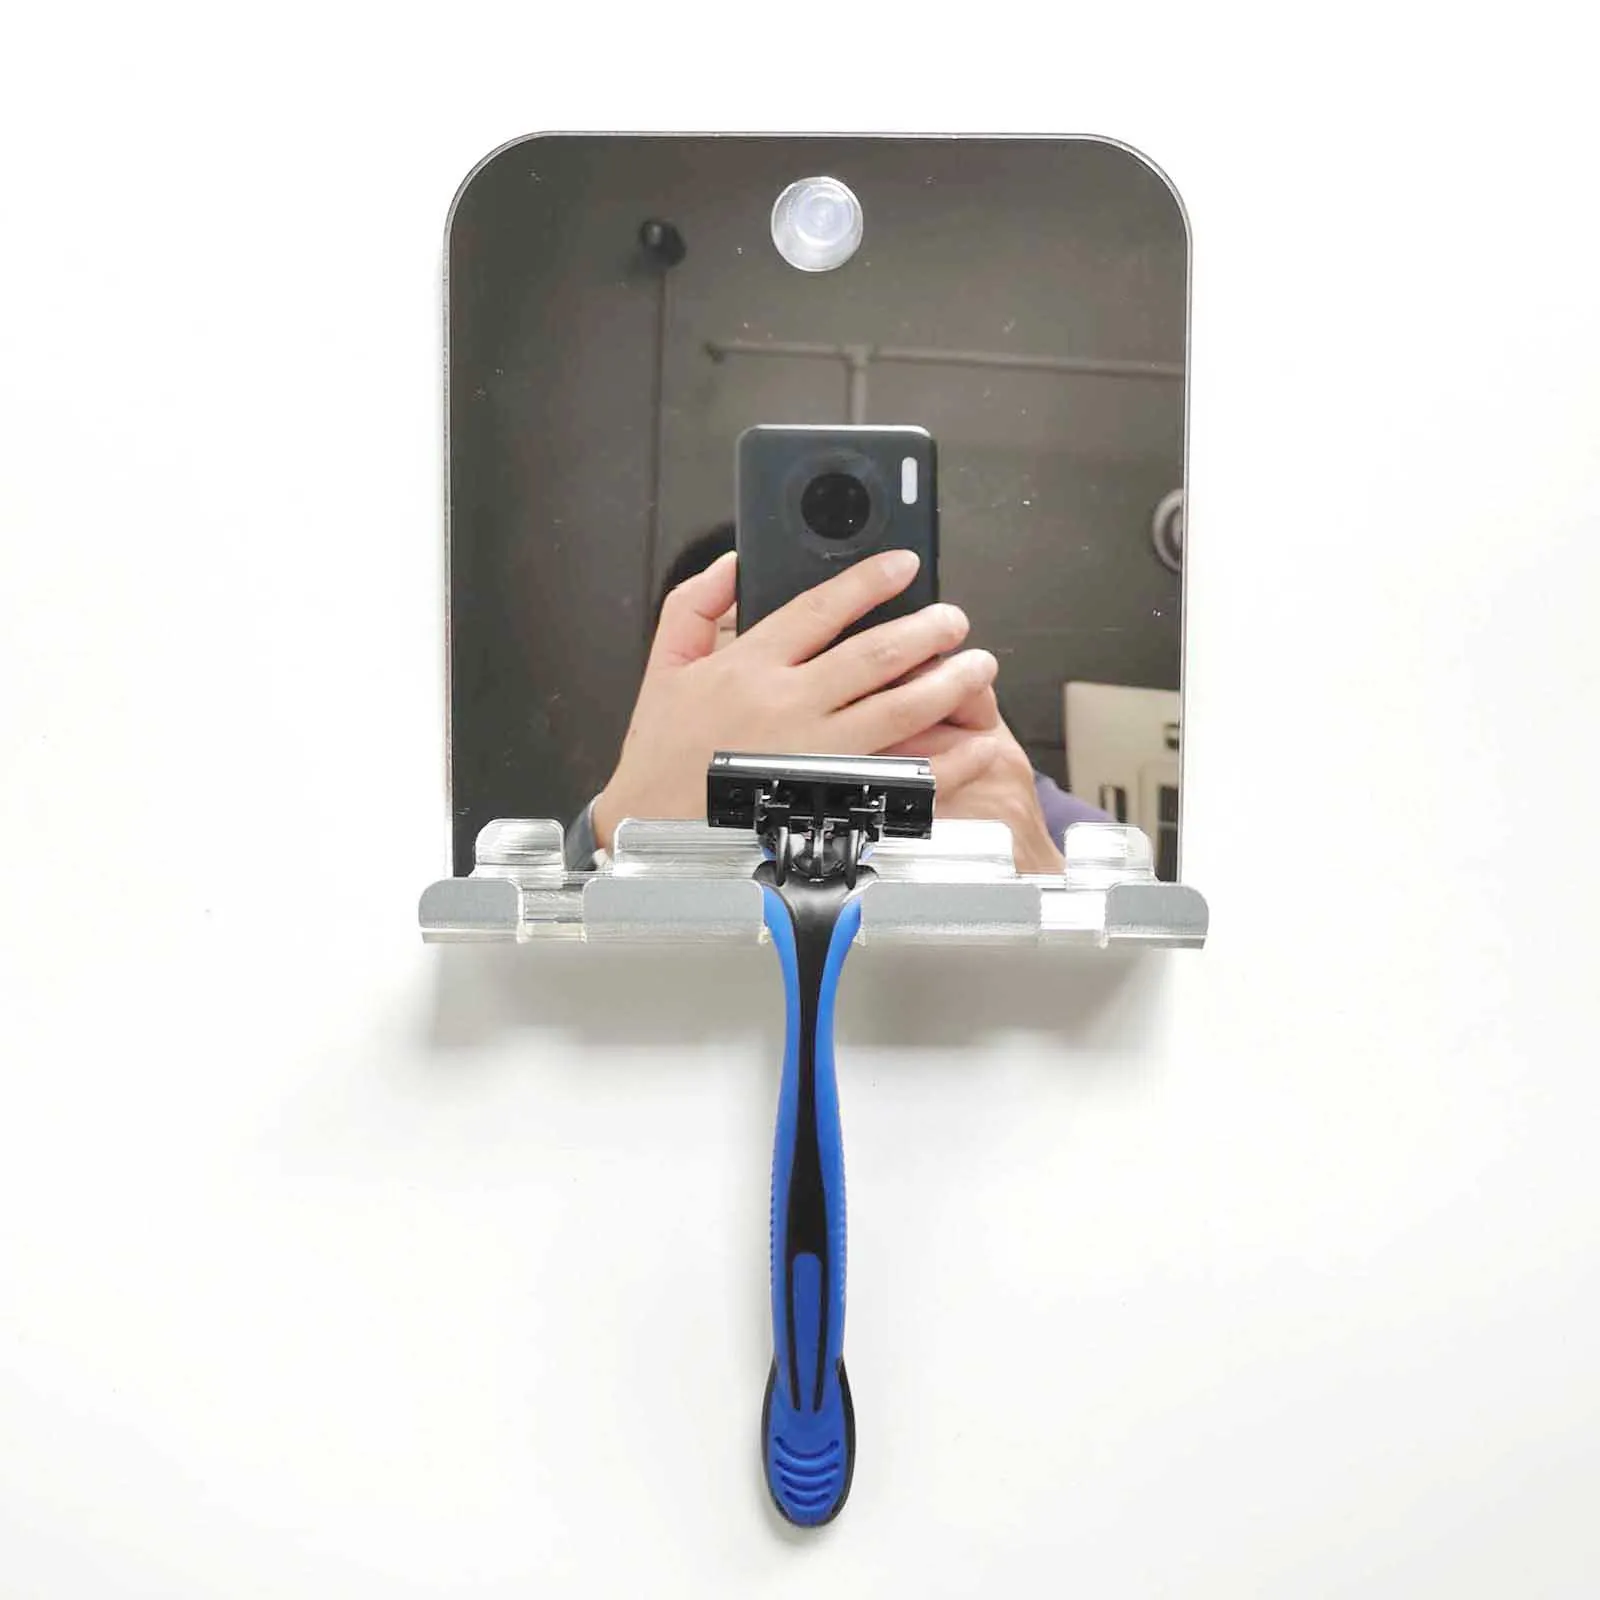 Acrylic Anti Fog Mirror Bathroom Shower Shaving Fogless Mirror Washroom Travel Accessories with 2pcs Wall Suction For Men Women